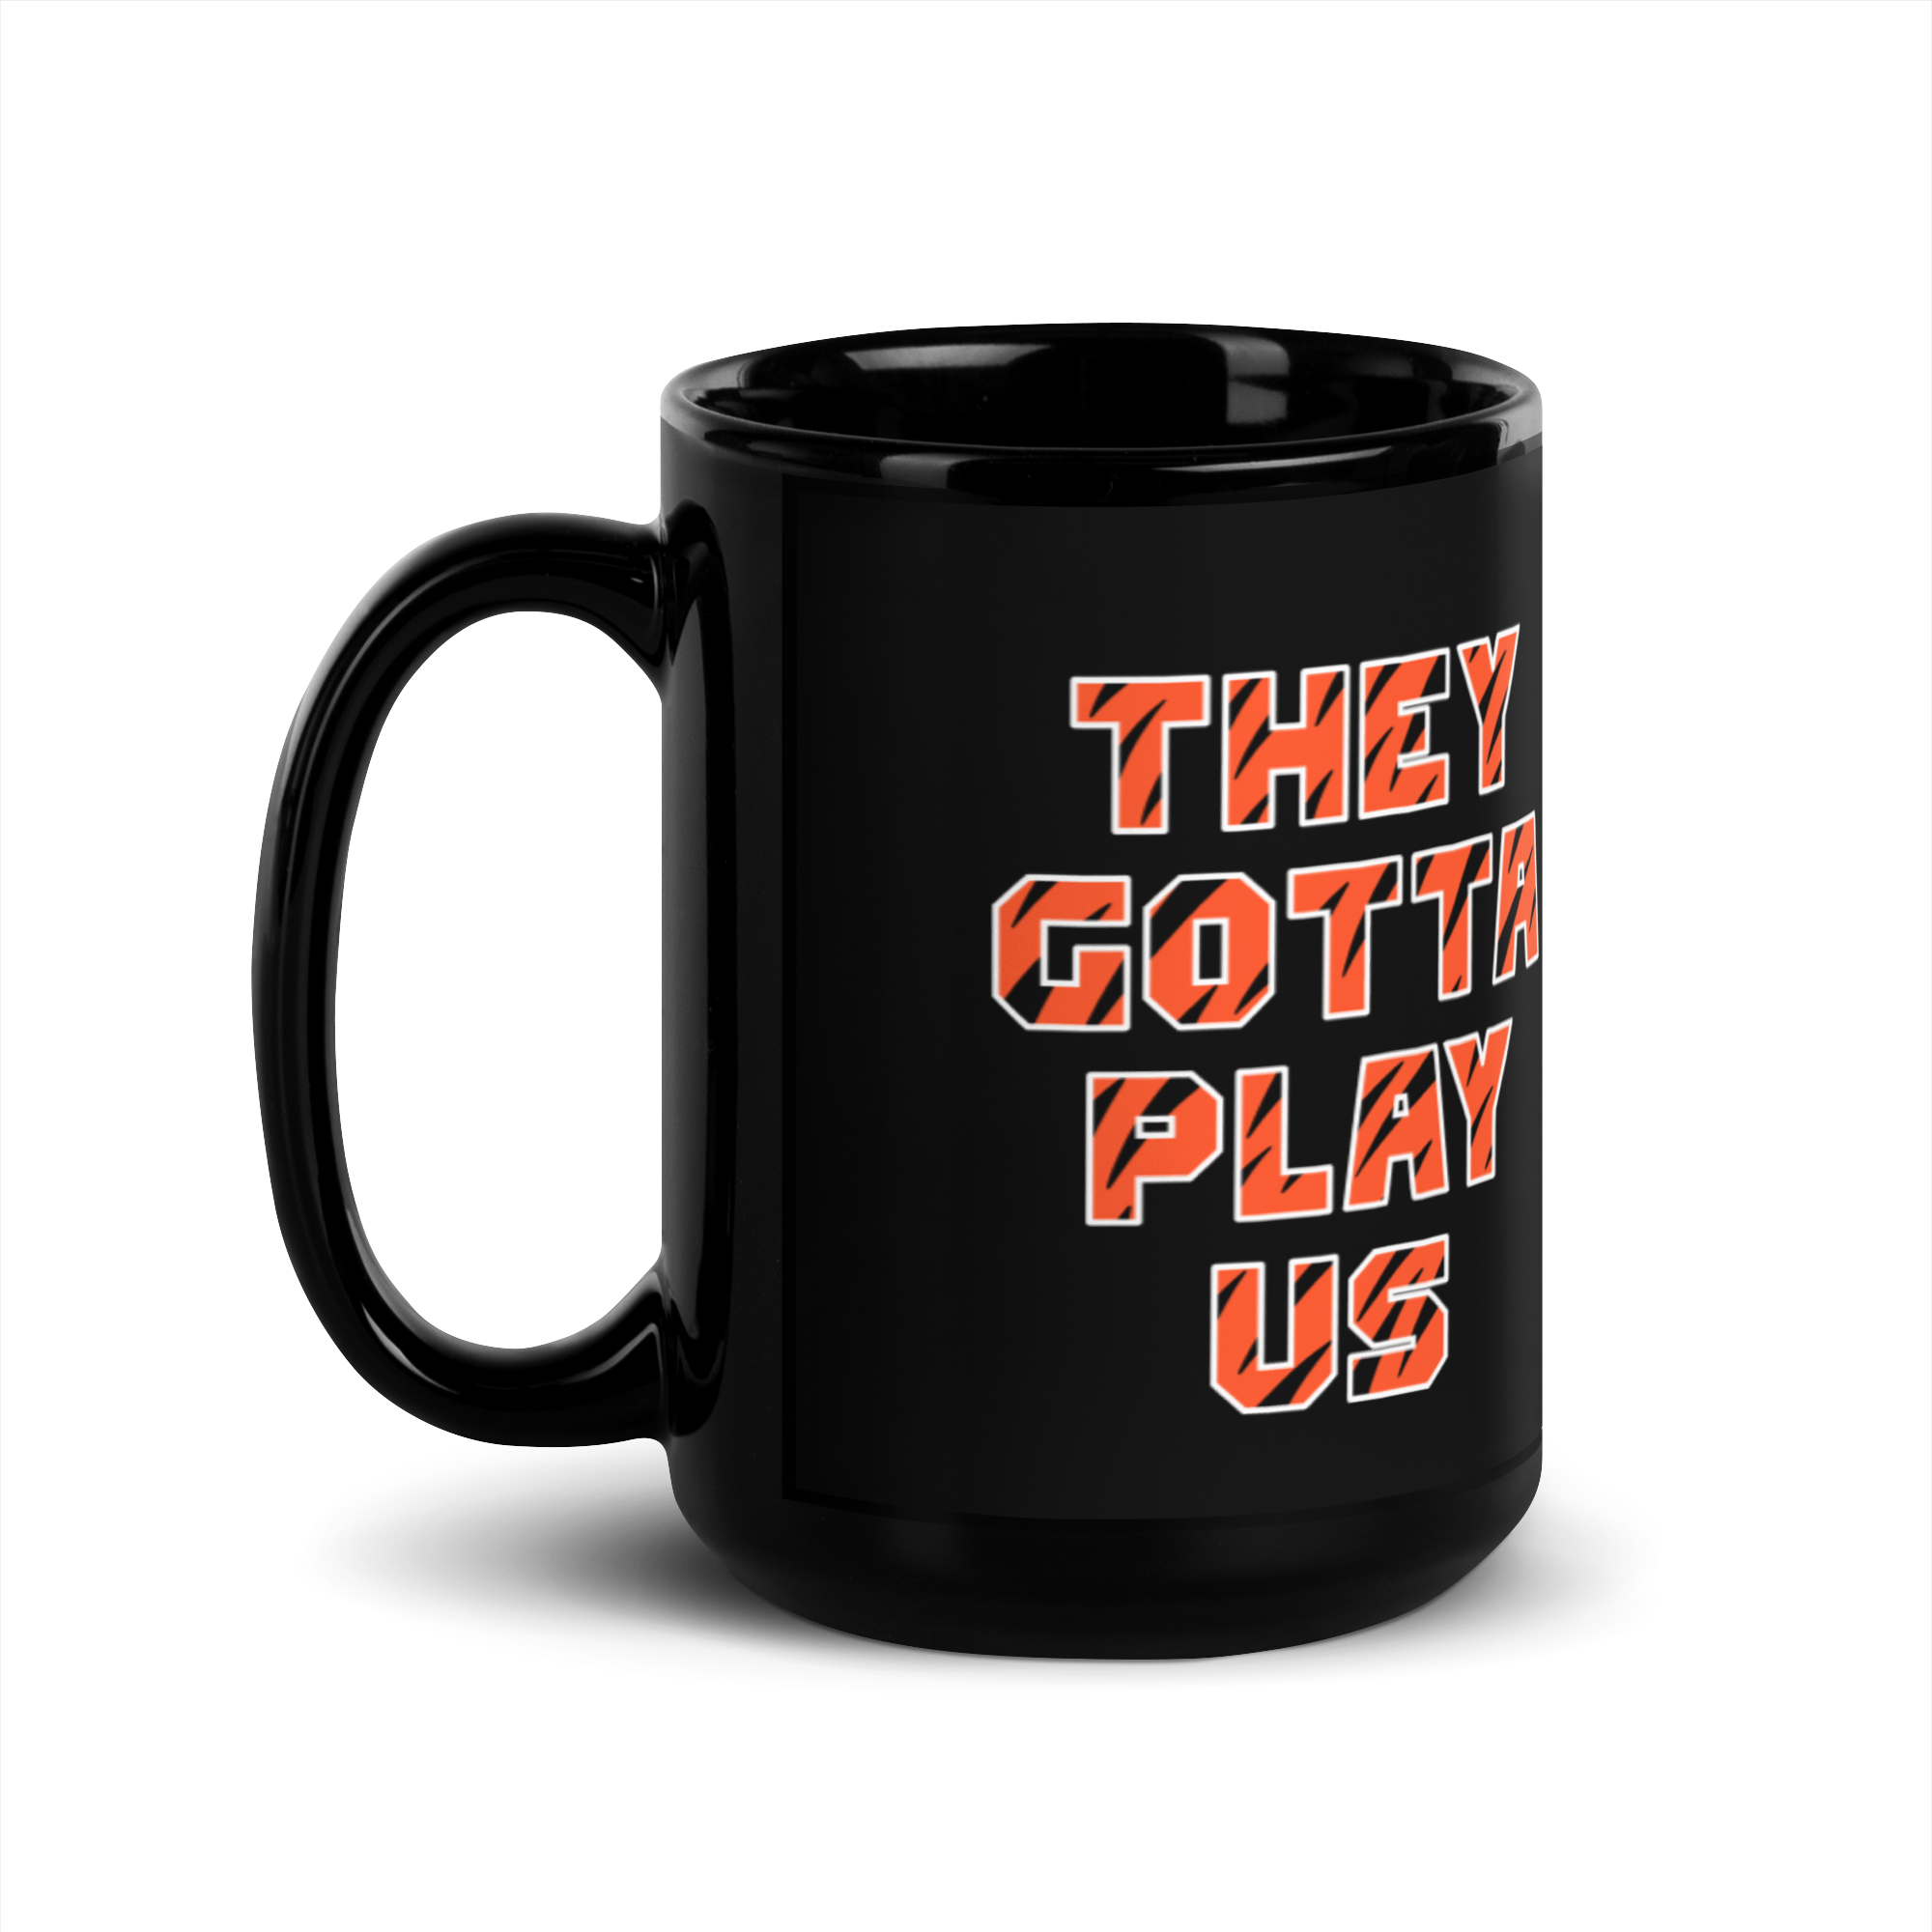 They Gotta Play Us - Black Glossy Mug